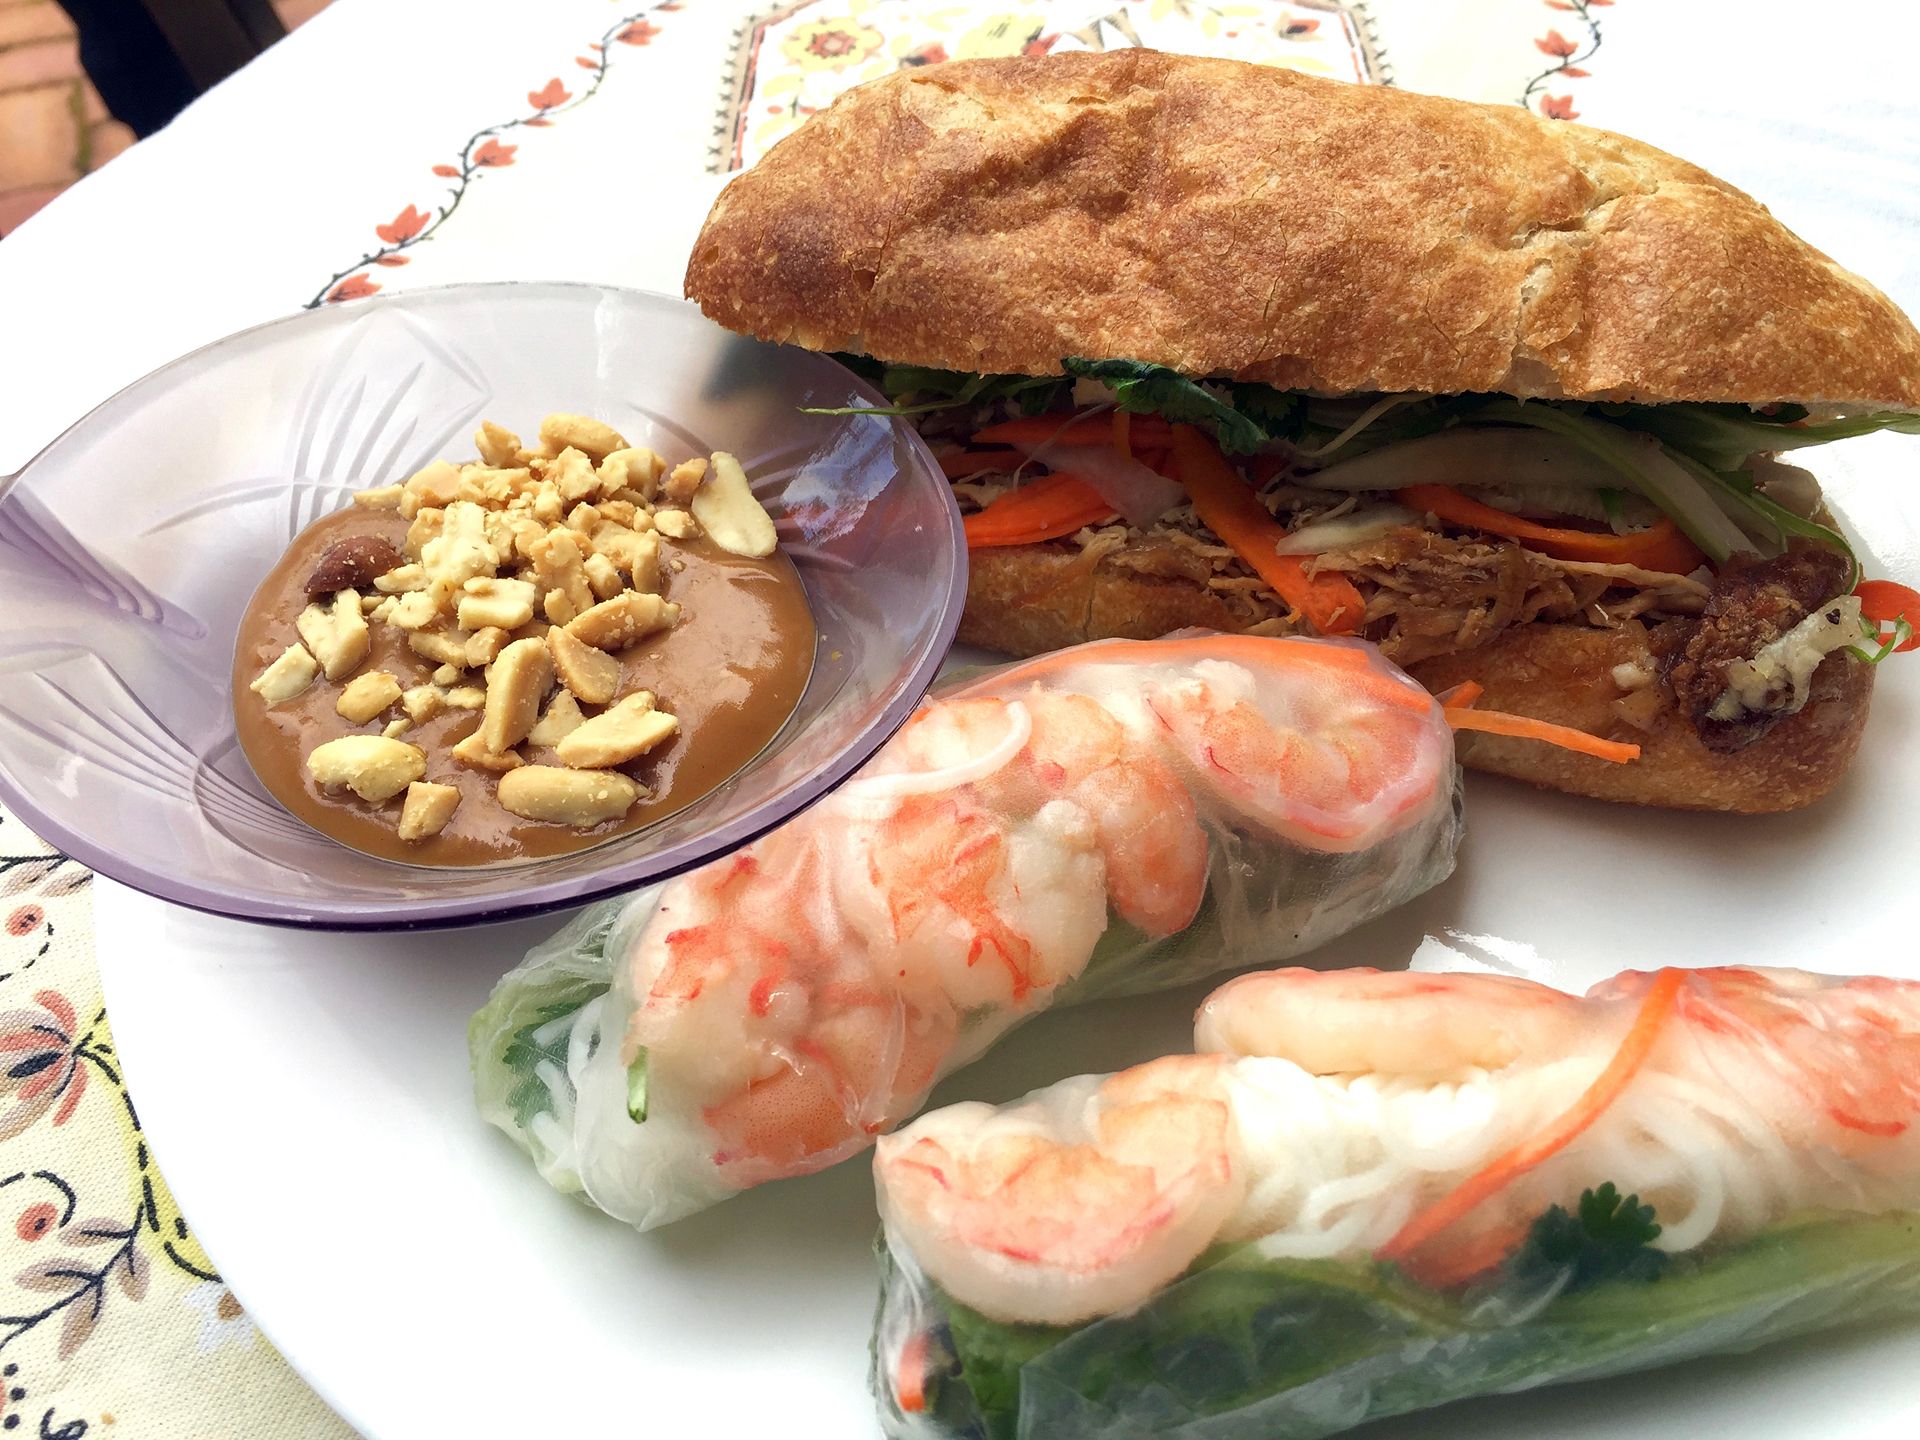 Shrimp rolls and banh mi sandwich made by Thoa van Seventer.